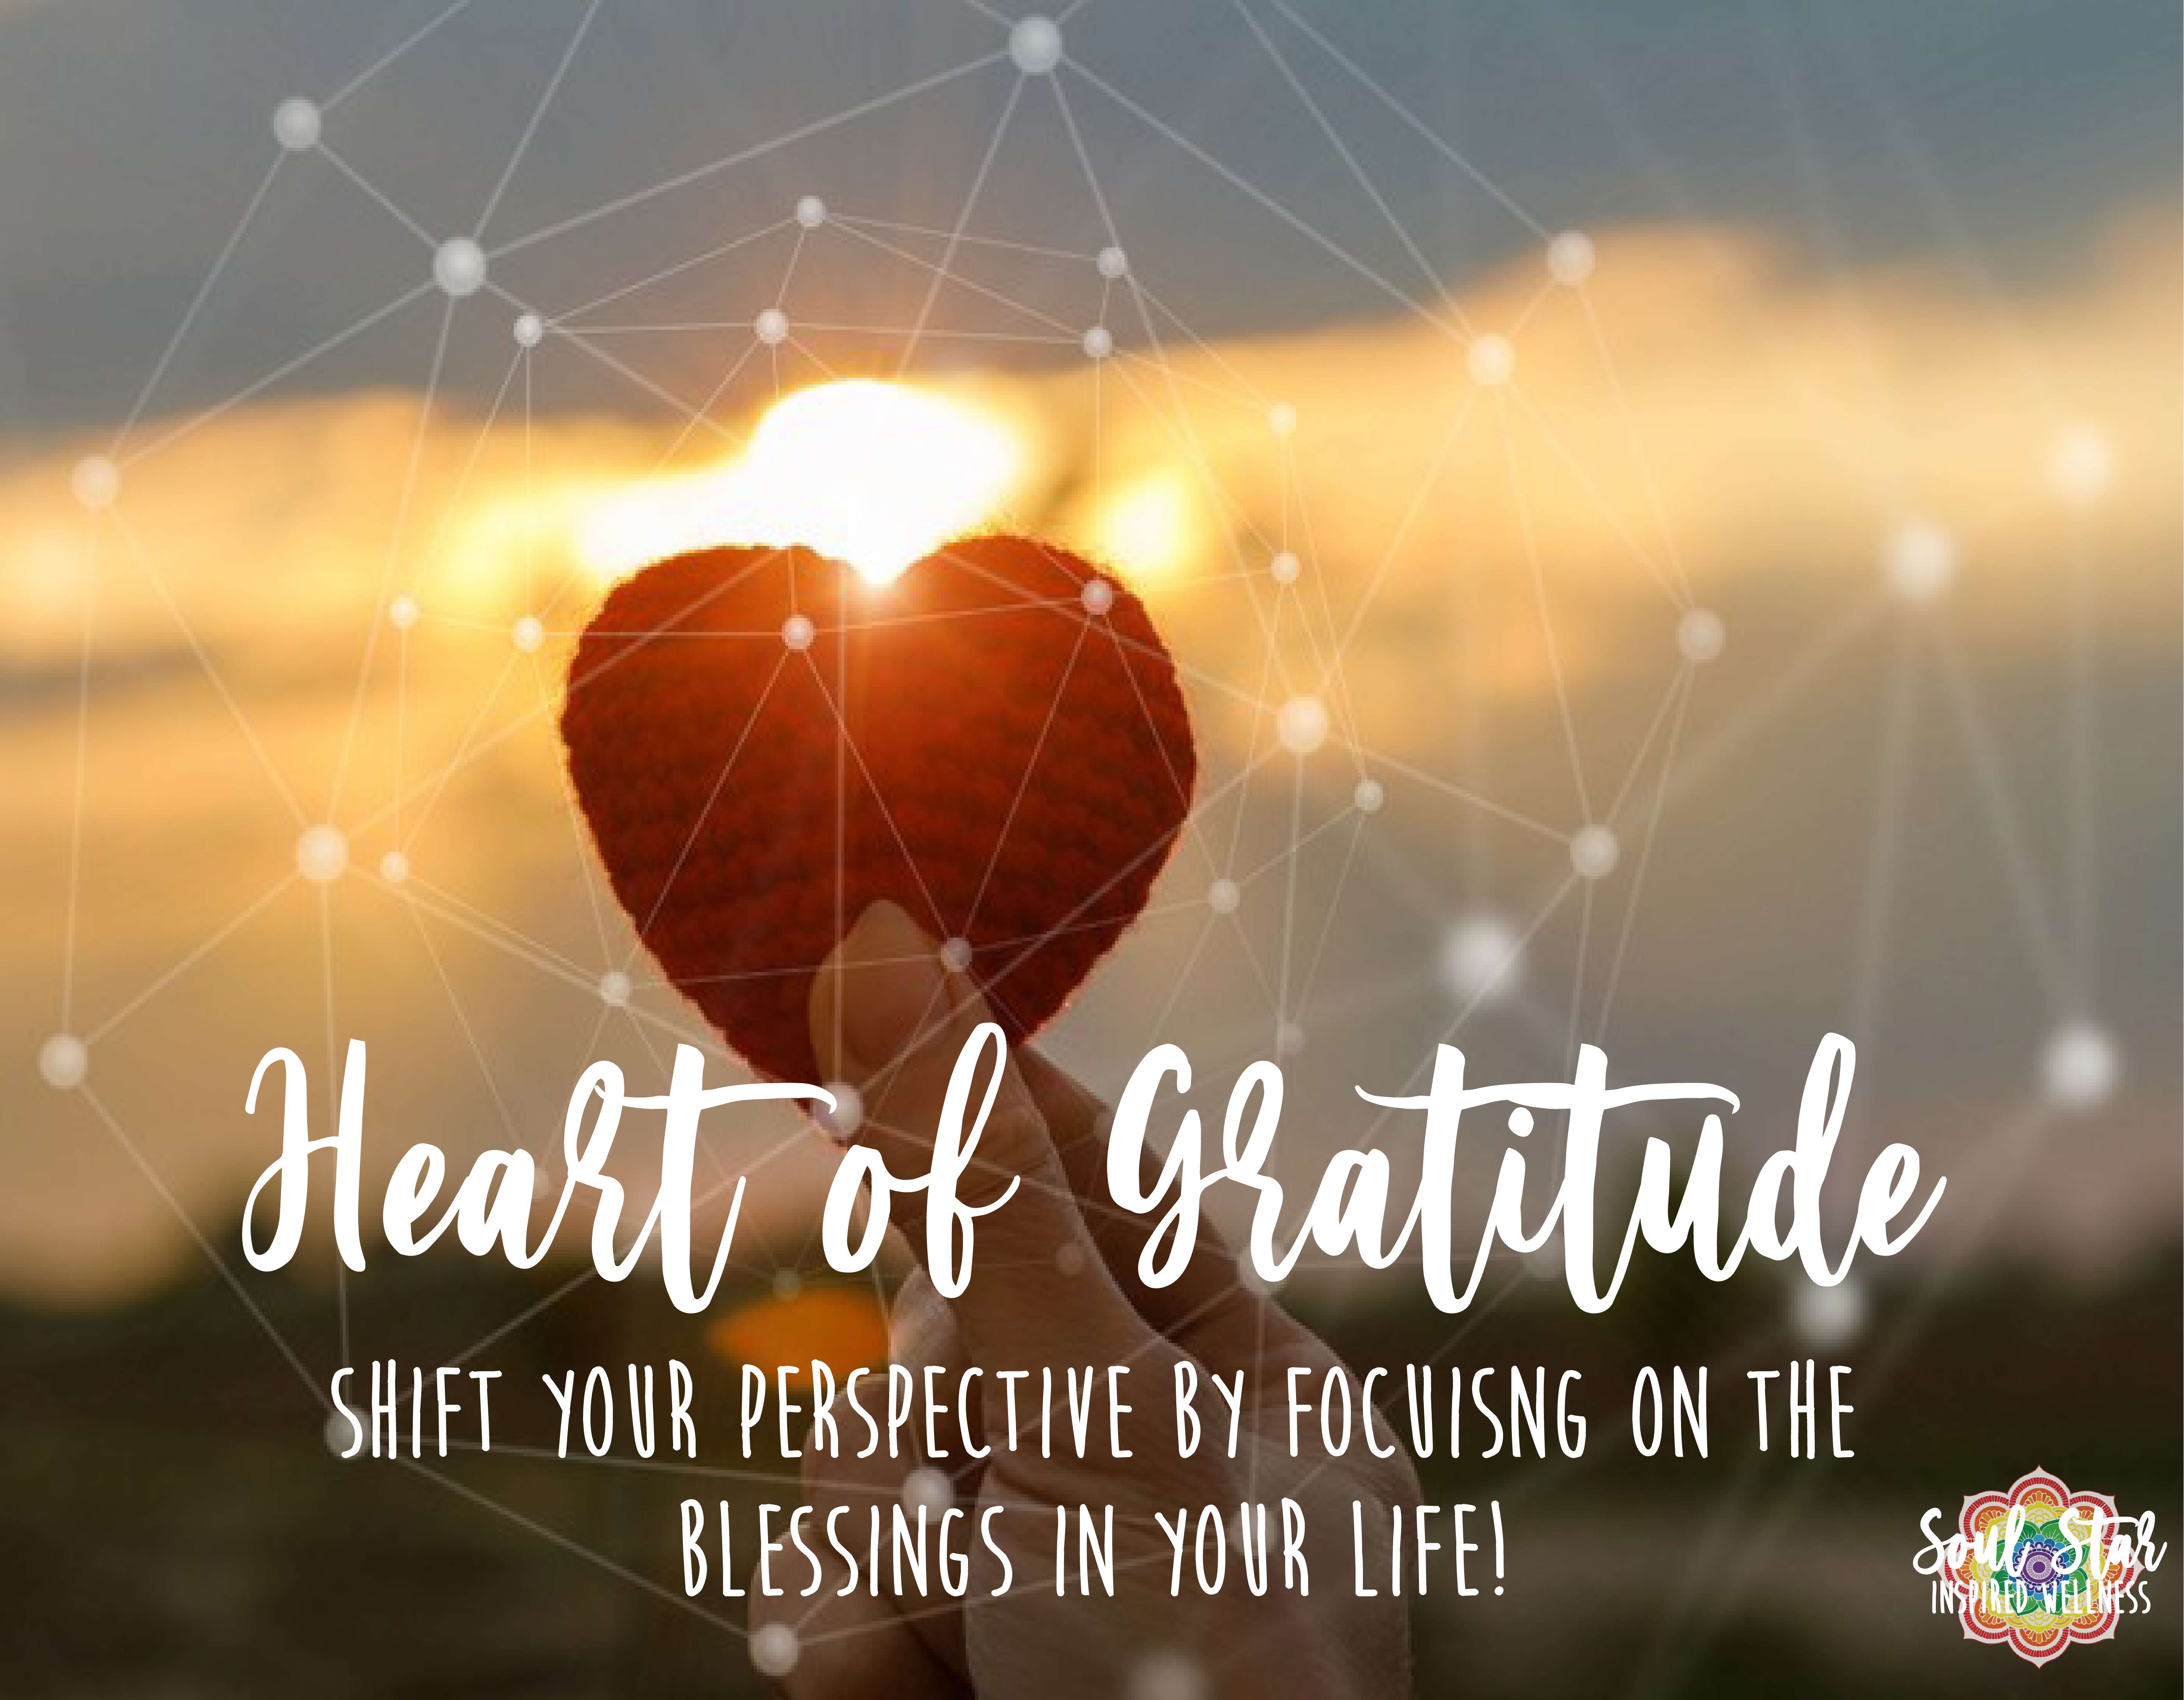 heart of gratitude imagery